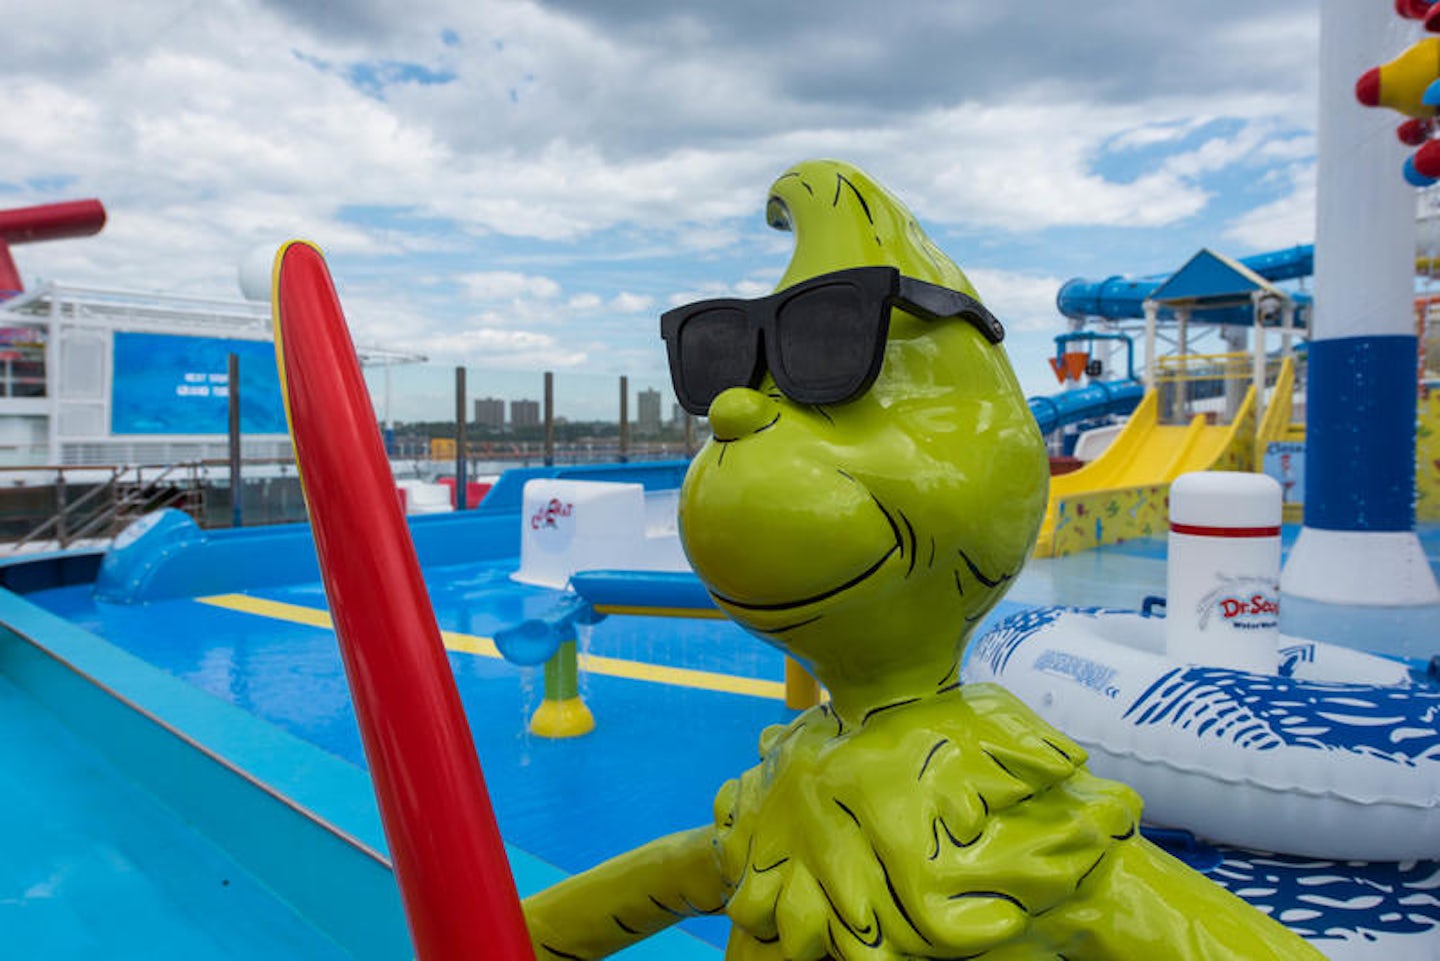 Dr. Seuss WaterWorks on Carnival Horizon